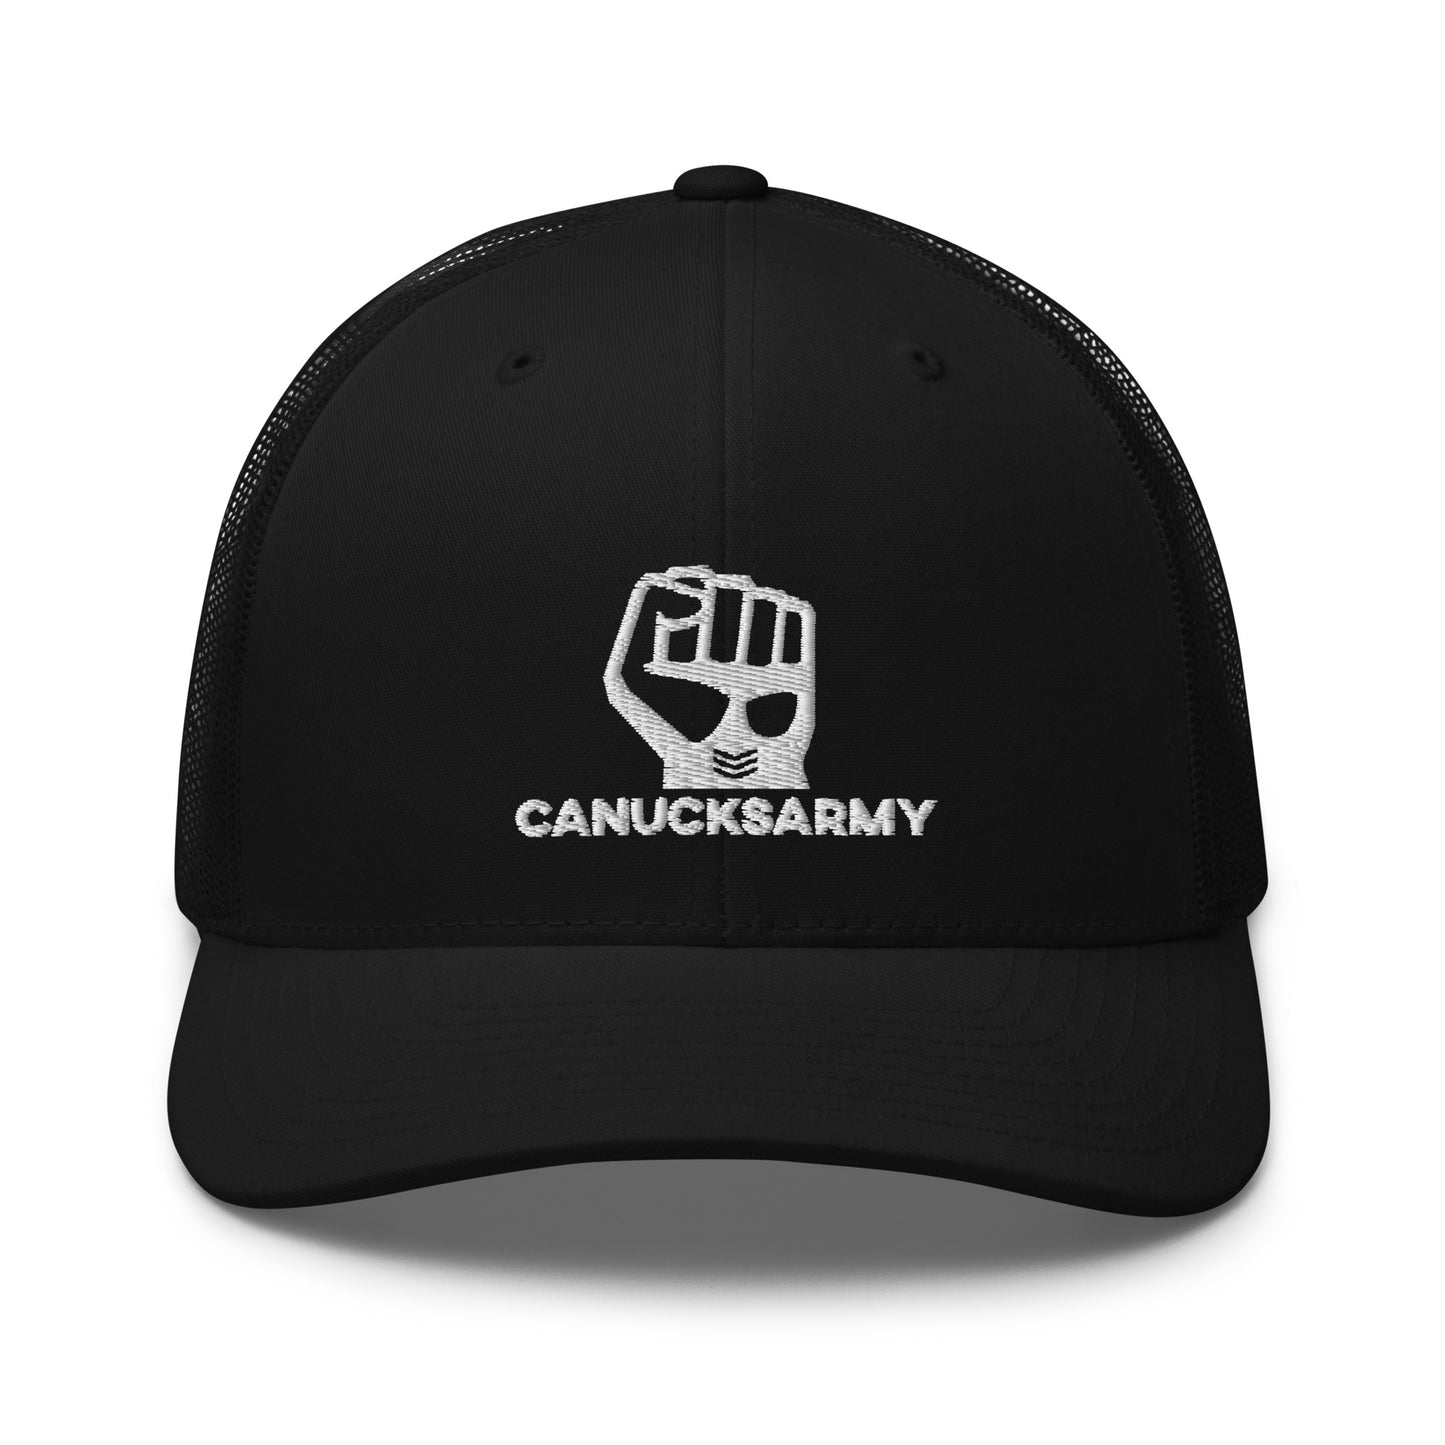 THE CLASSICS - Canucksarmy Black Trucker Hat